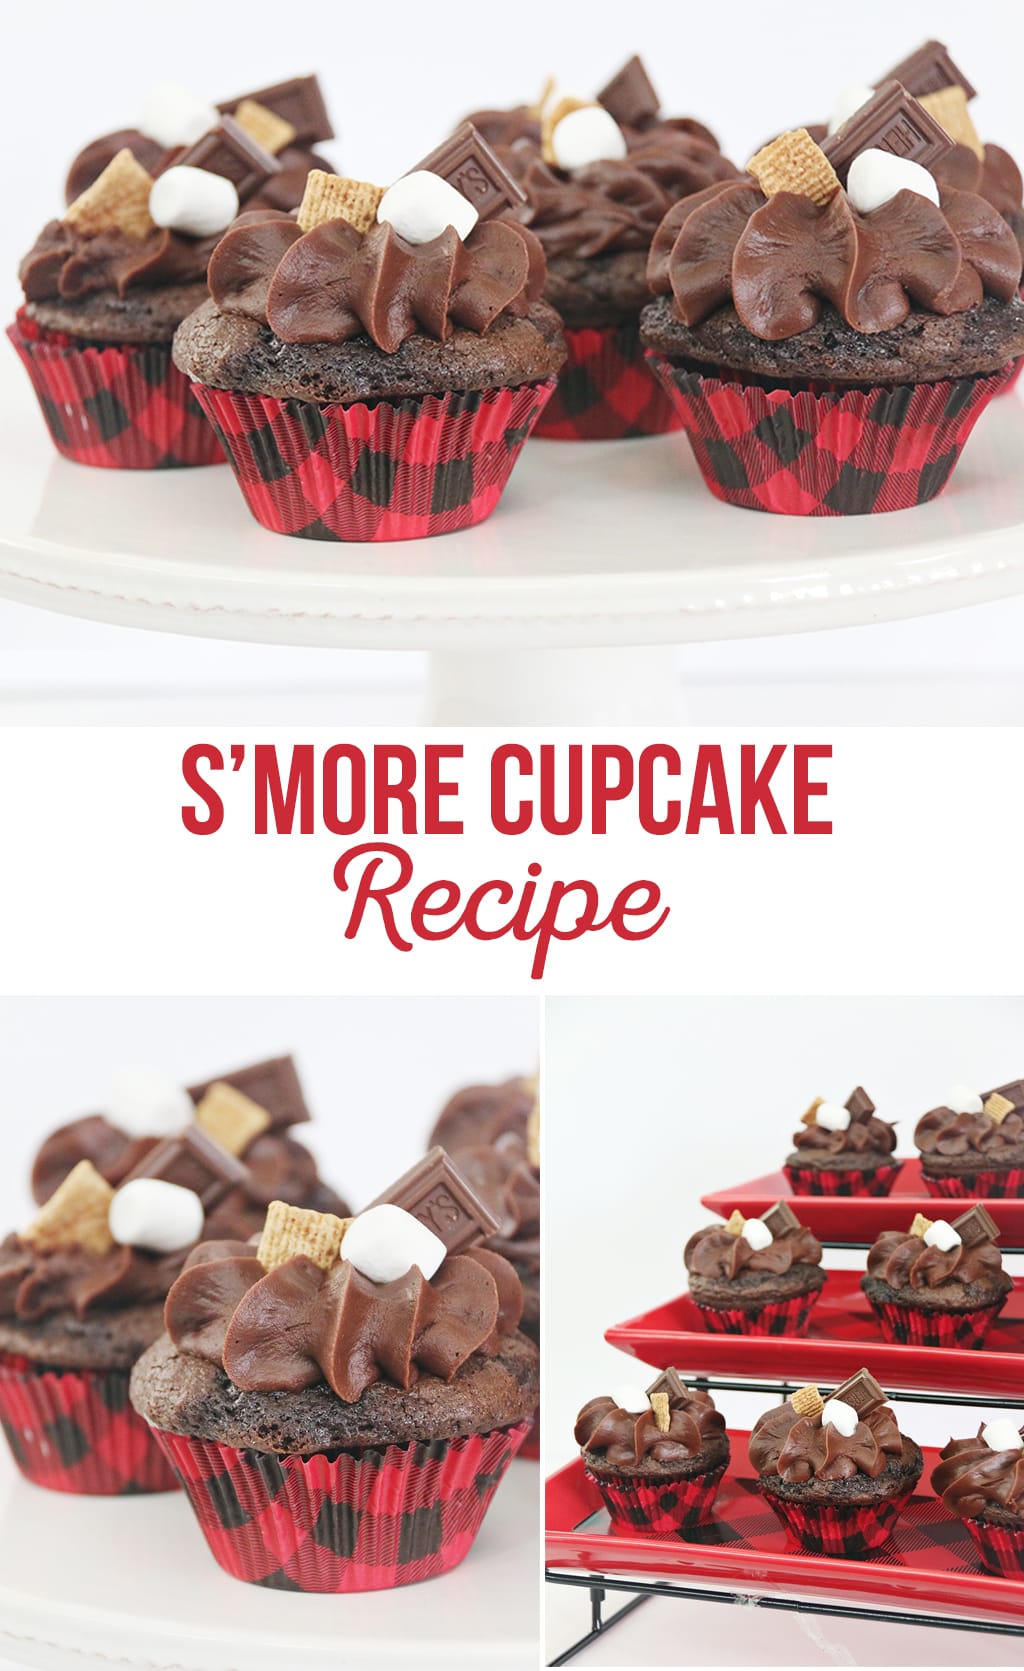 S'mores Cupcake Recipe